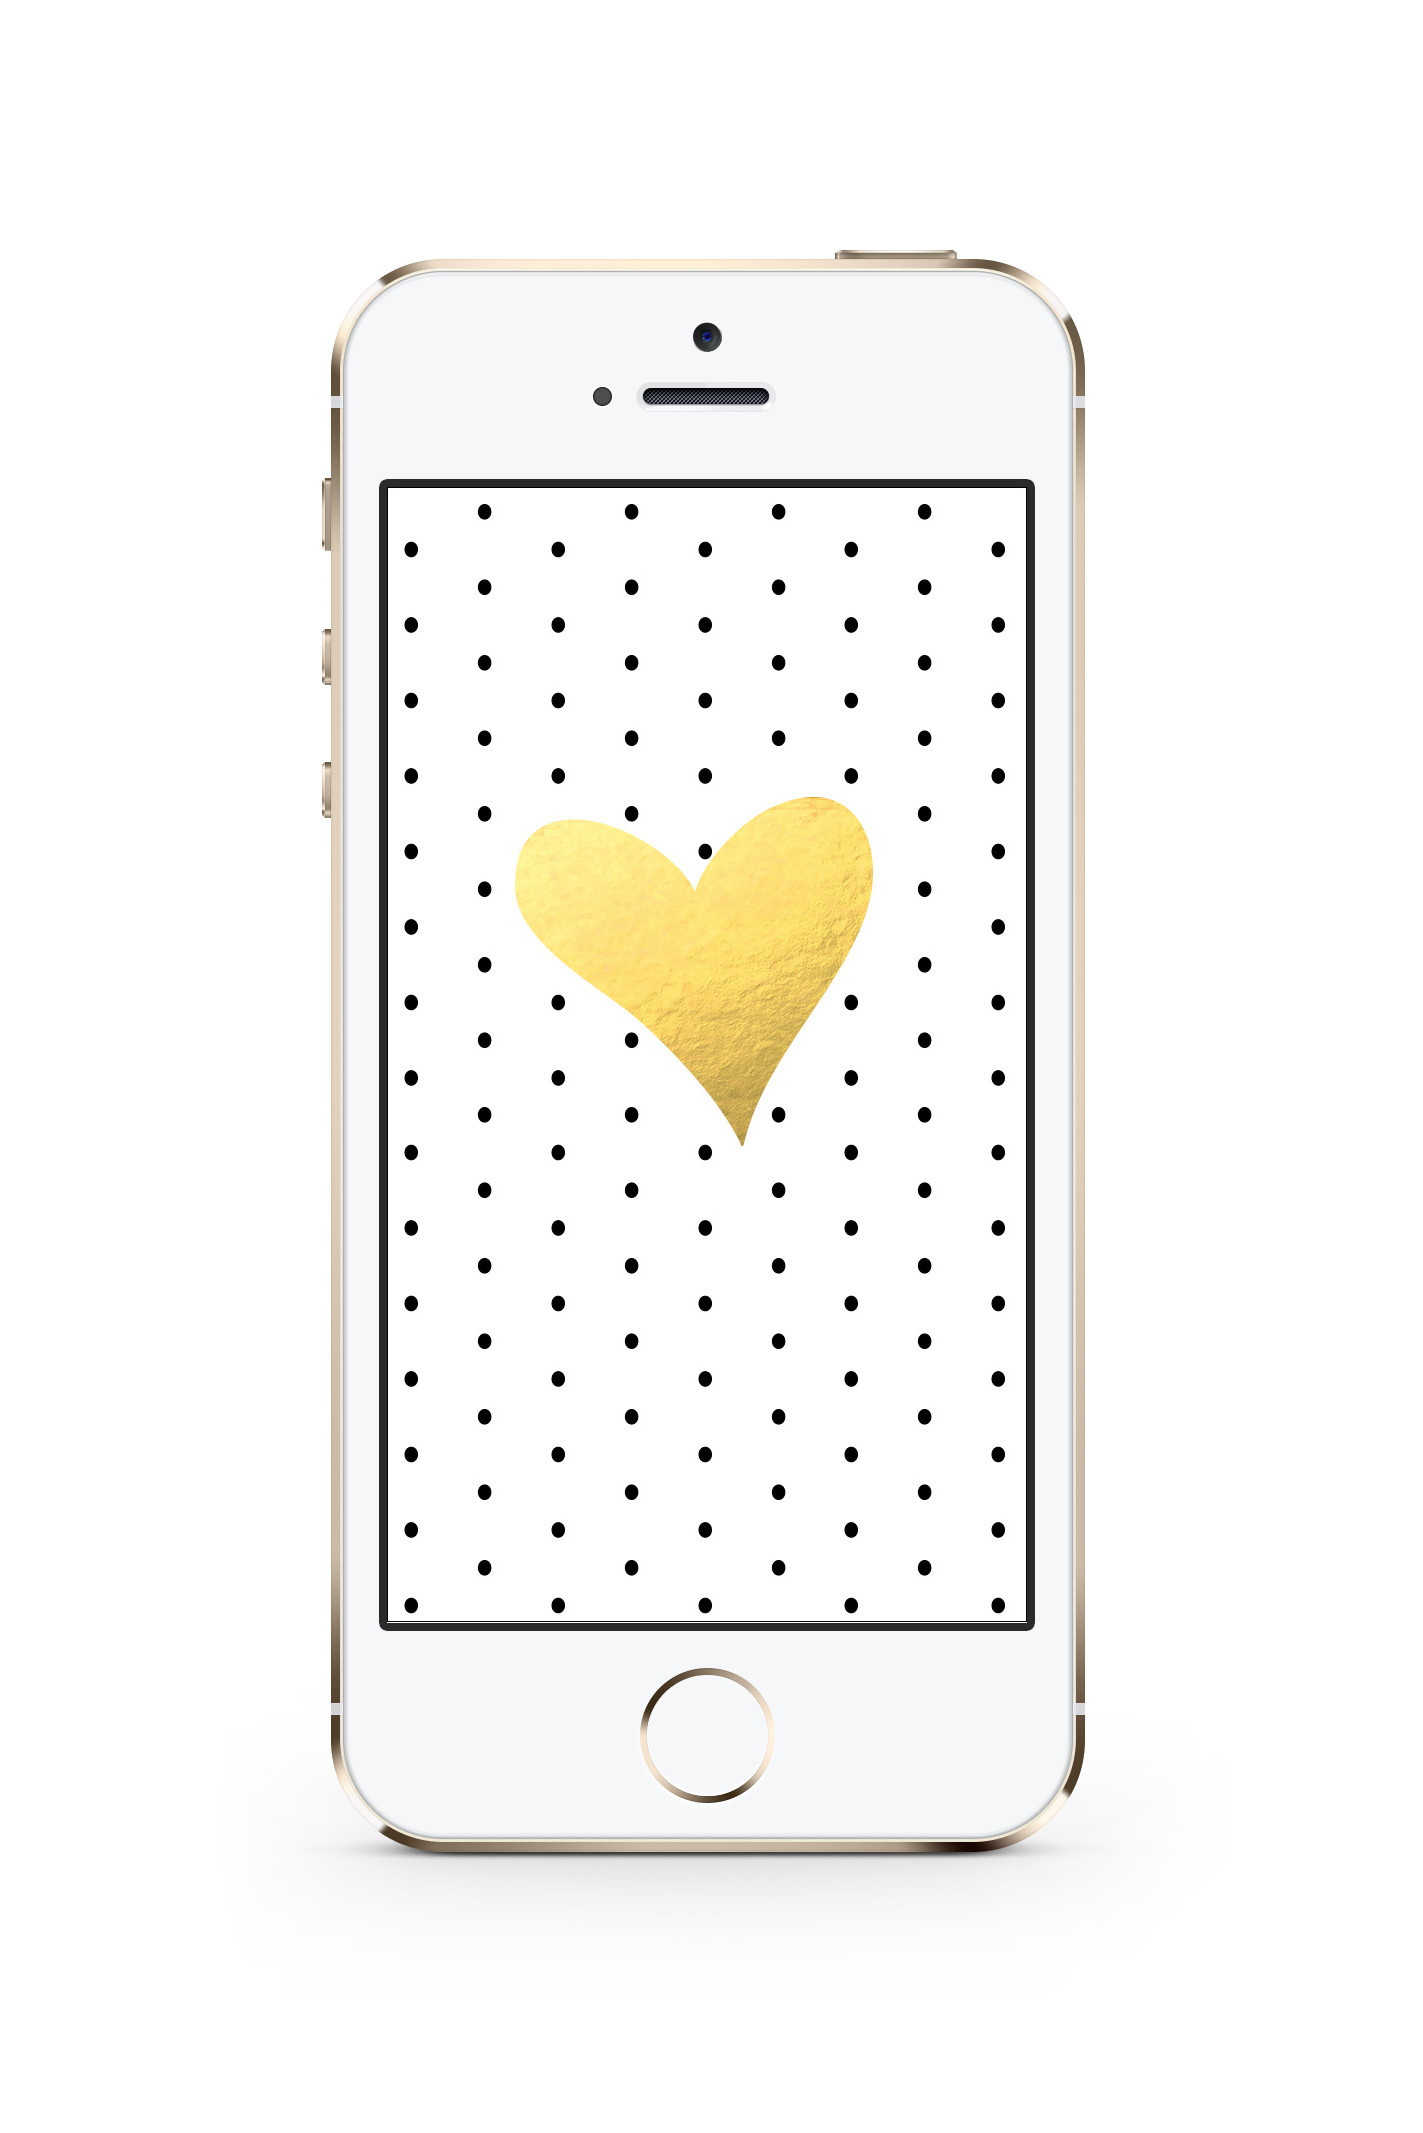 1423x2133 Free iPhone Wallpaper! Black & White Dots + Gold Foil Heart!